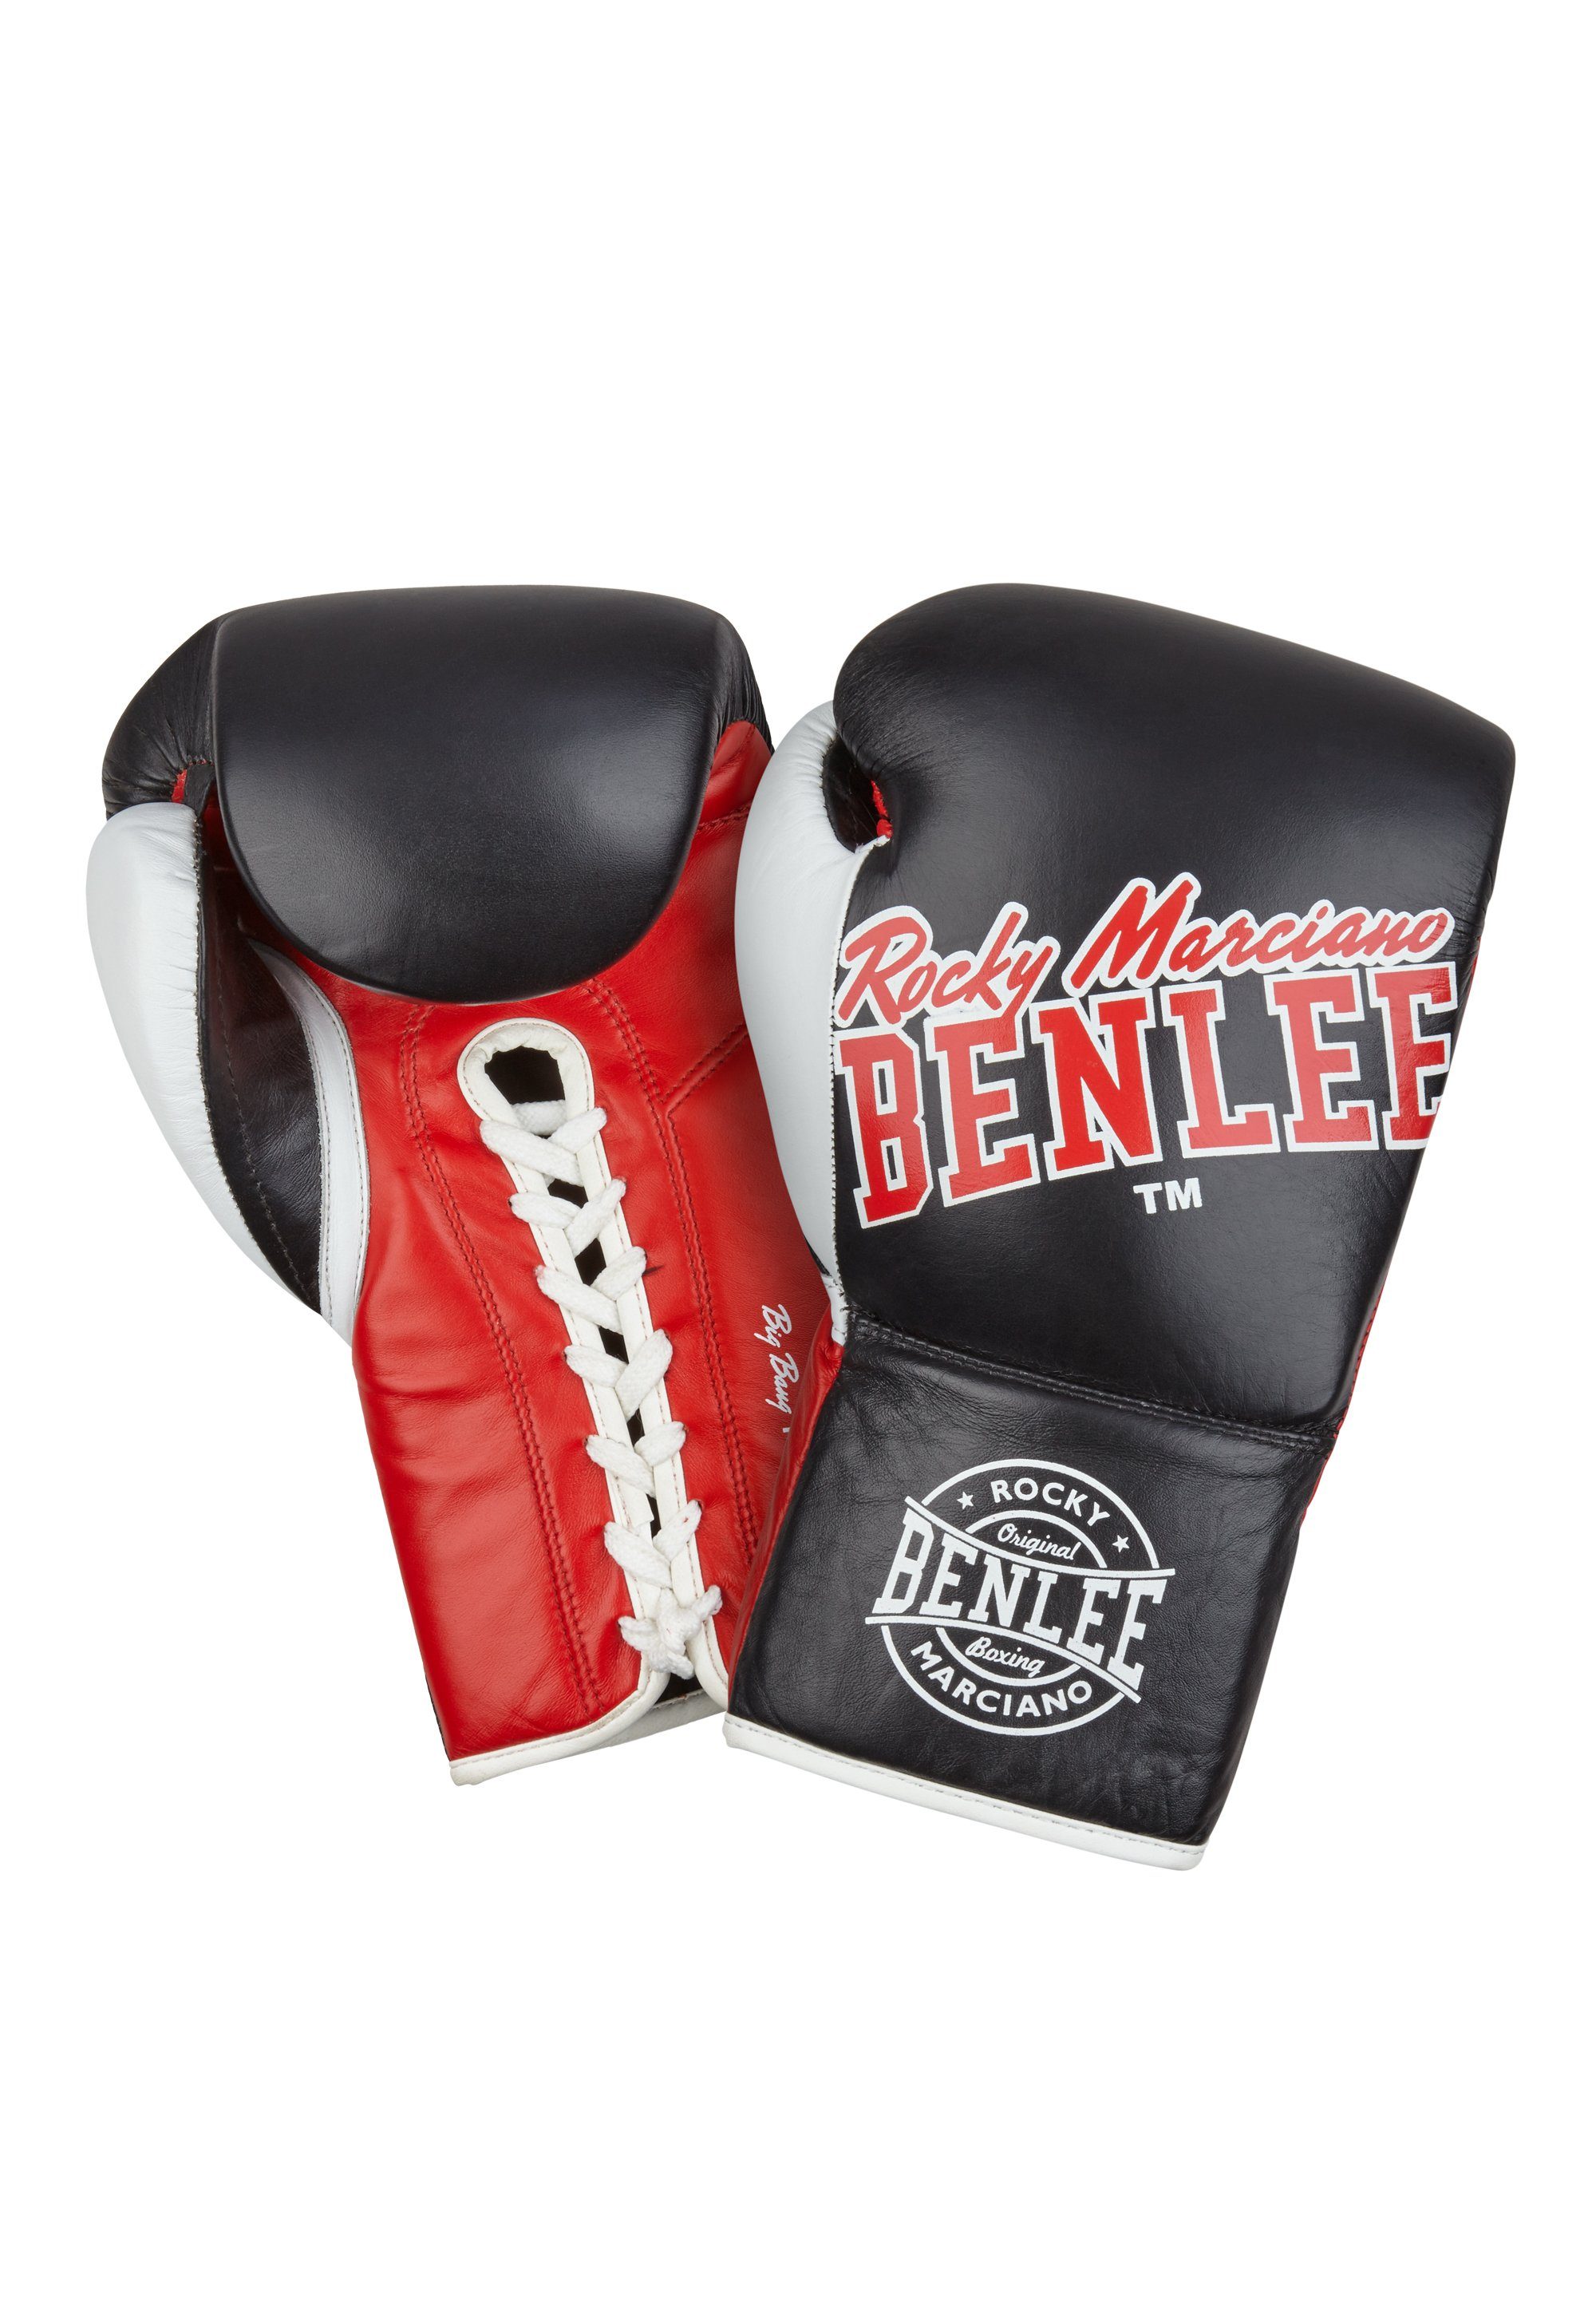 Marciano BANG Black Benlee Boxhandschuhe BIG Rocky